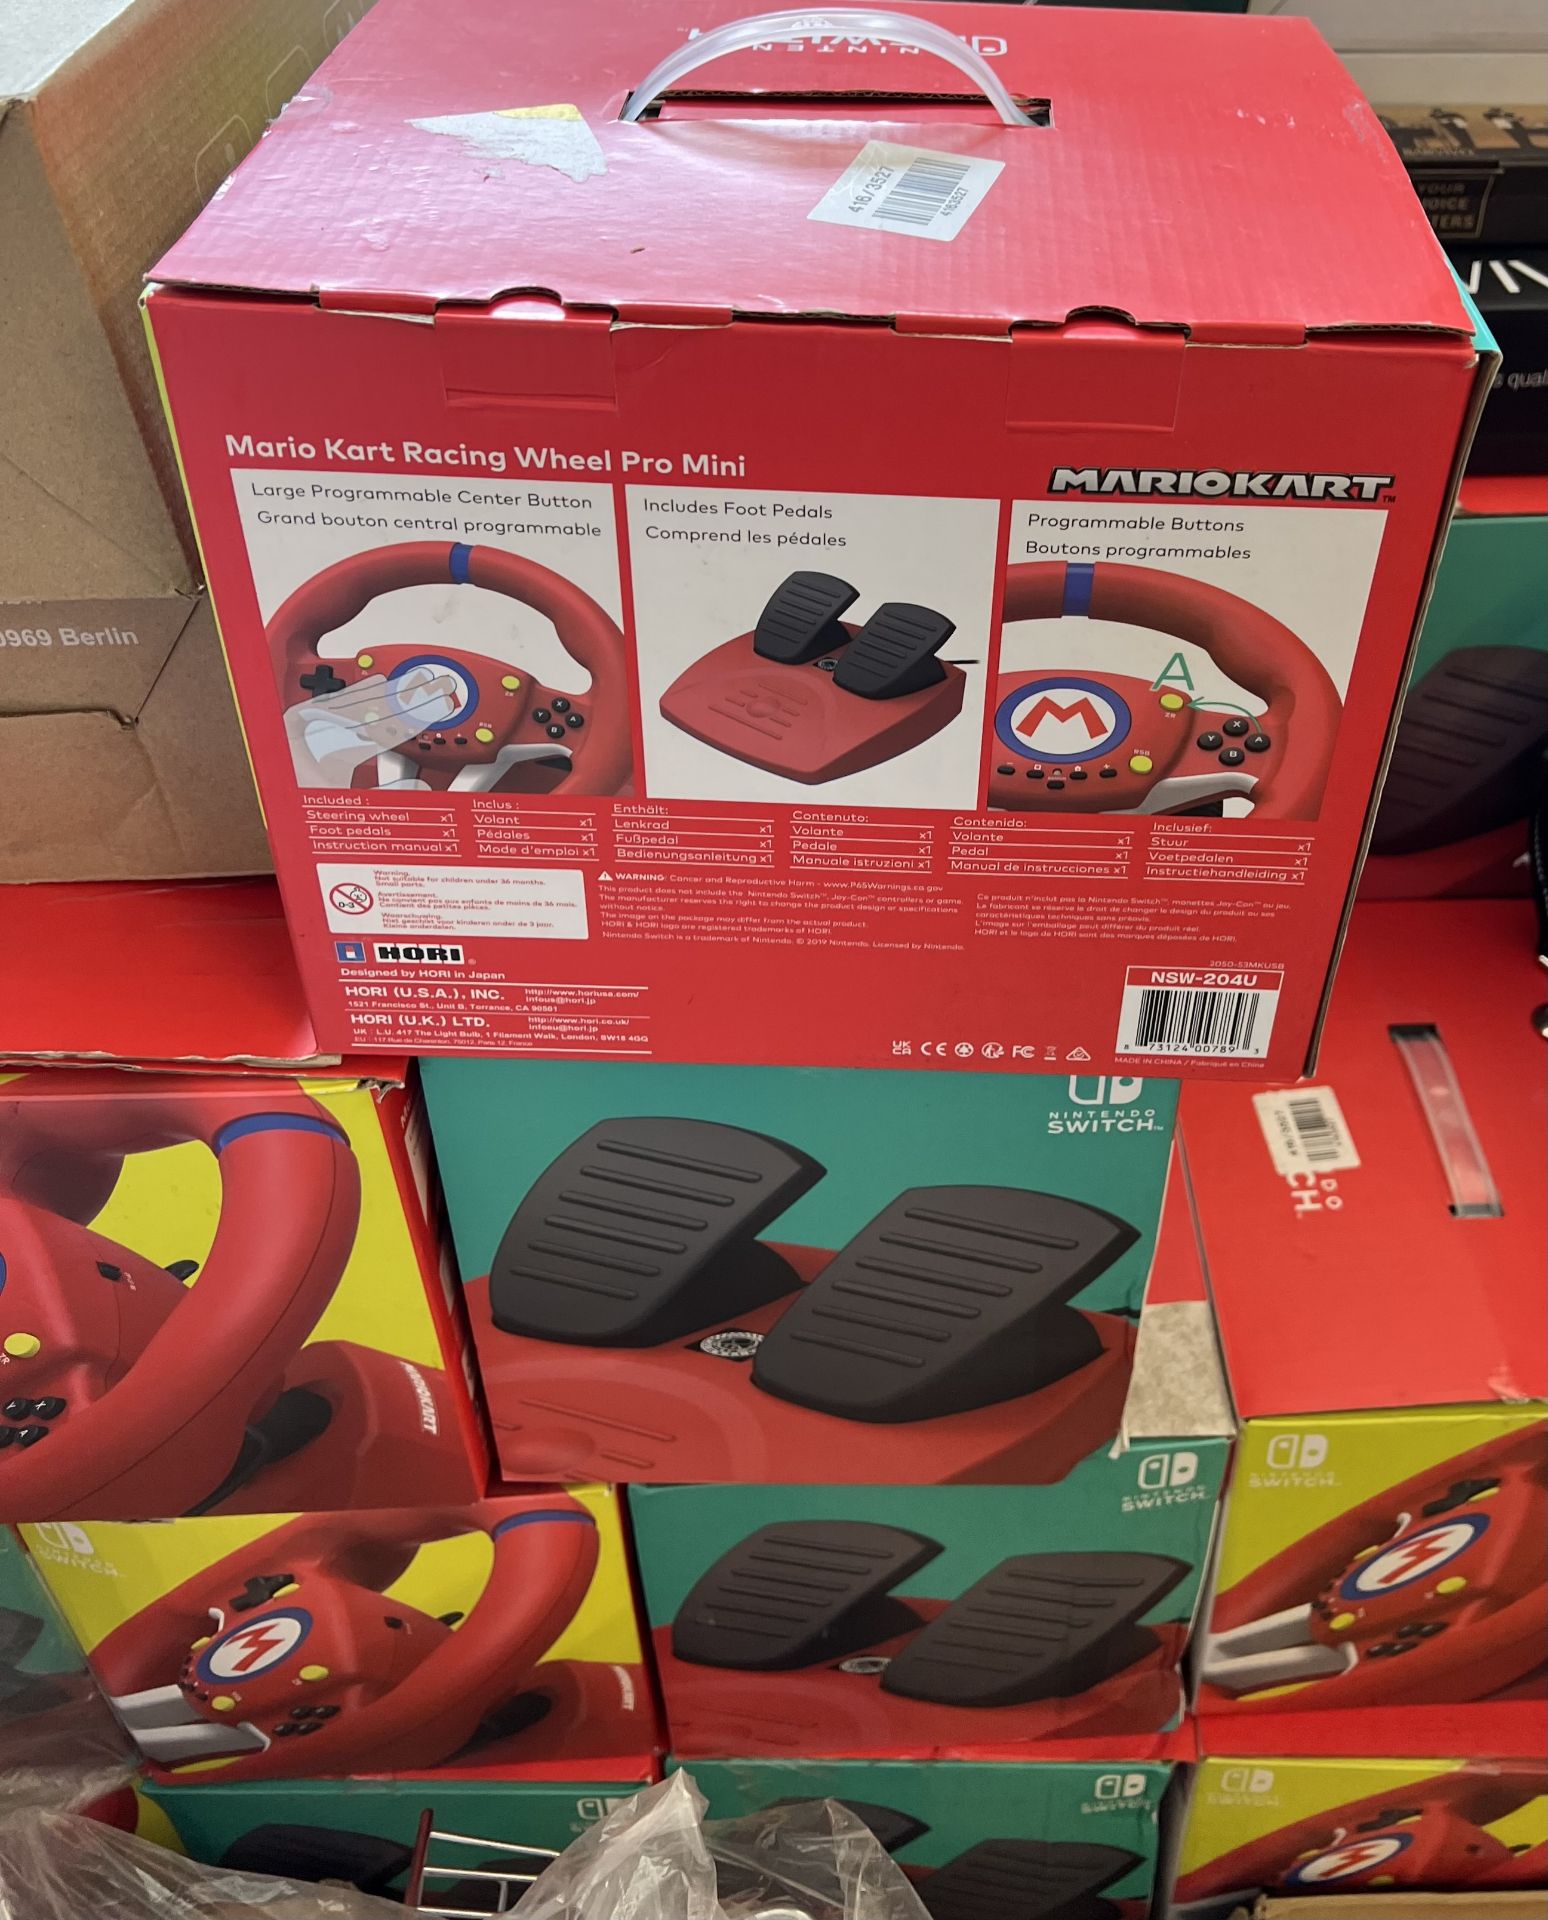 RAW RETURN - 5 x HORI Mario Kart Racing Wheel Pro Mini for Nintendo Switch - RRP NEW WOULD BE £325! - Image 5 of 9